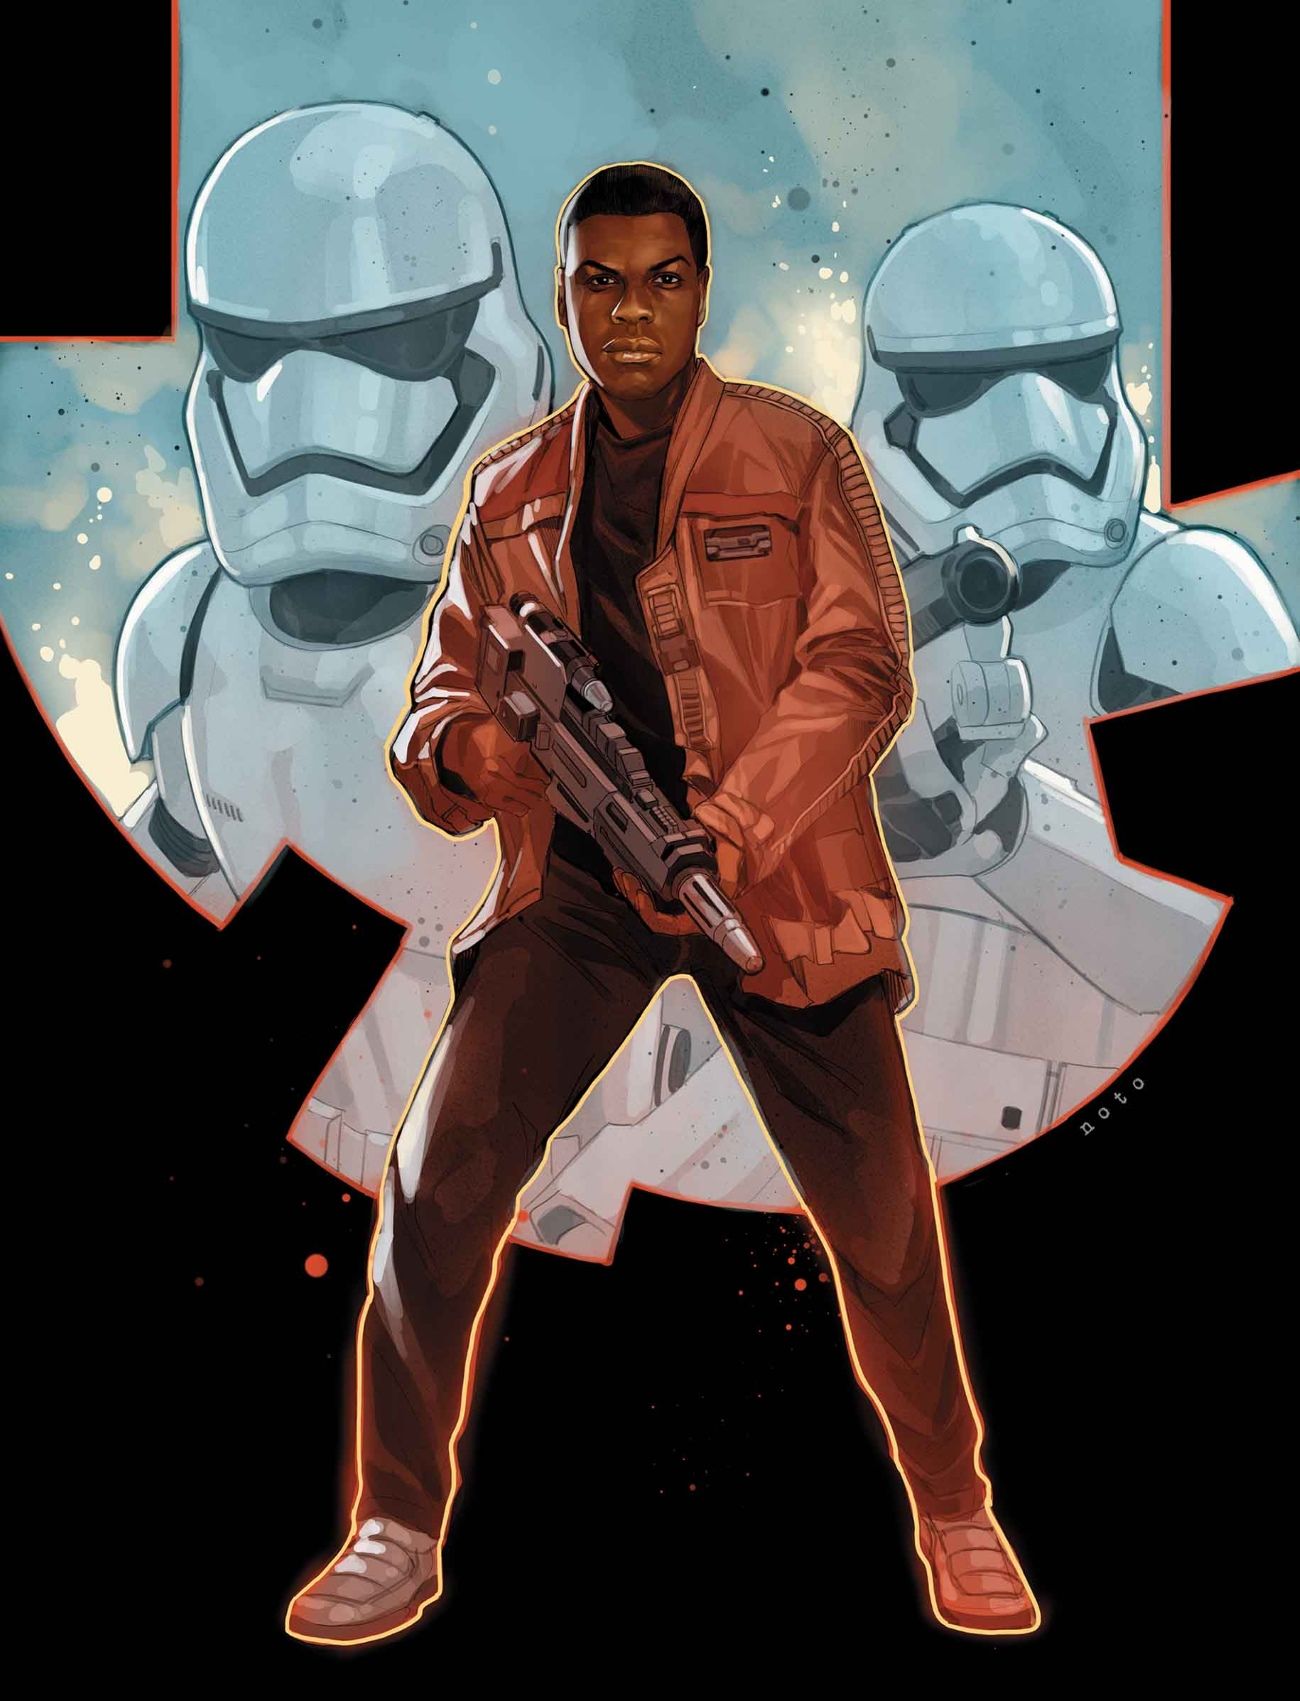 Finn Star Wars Comic Cover